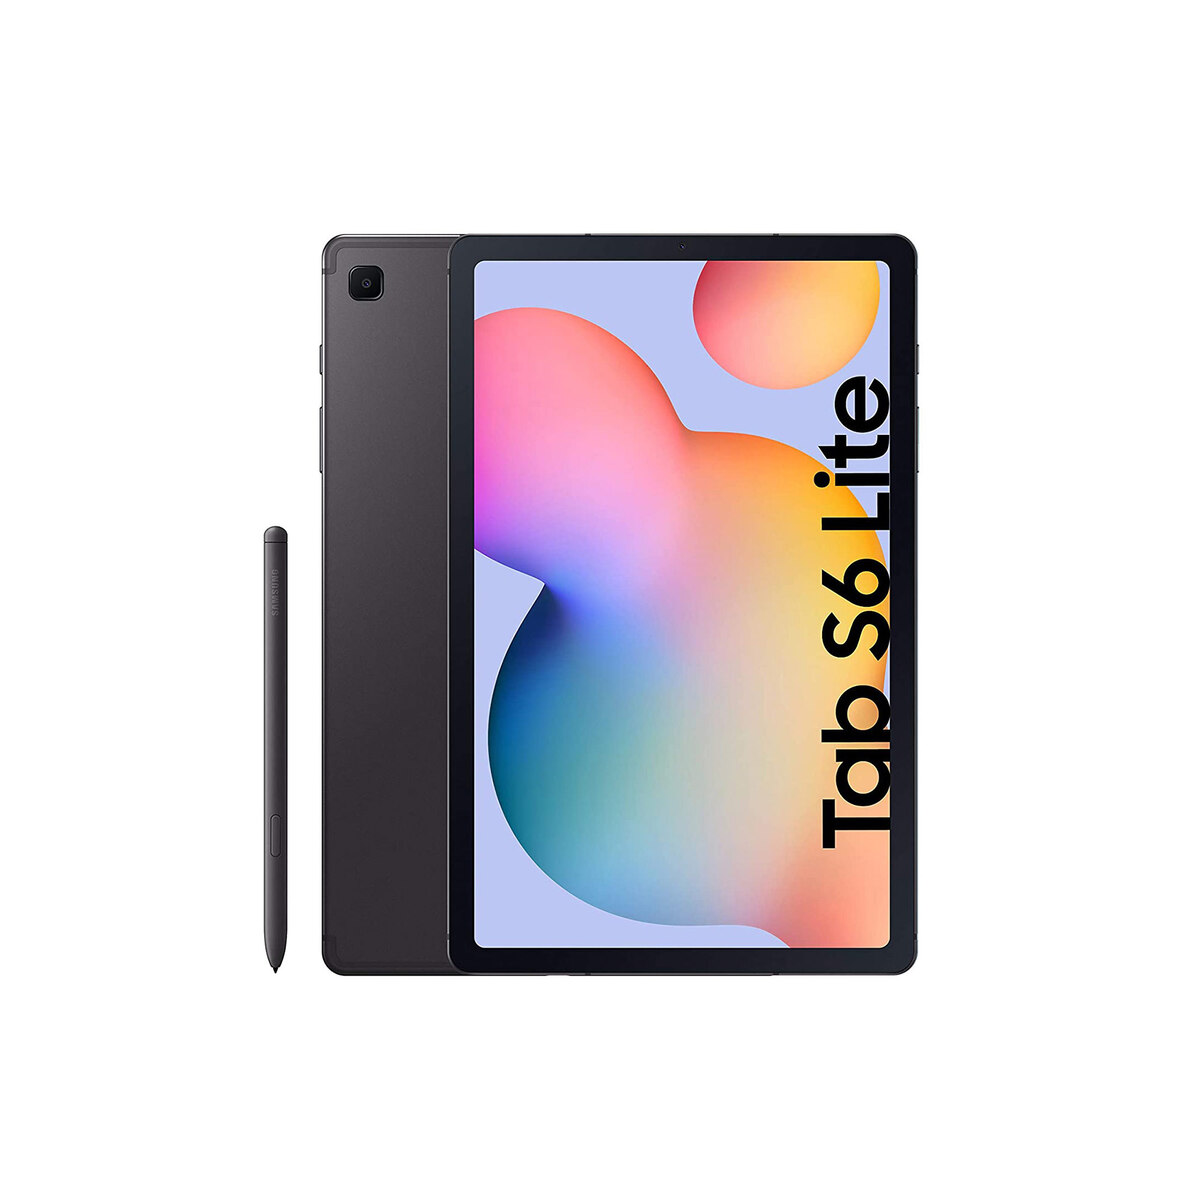 SAMSUNG Galaxy Tab S6 Lite With Stylus 4 GB RAM 64 GB ROM 10.4 inch with  Wi-Fi Only Tablet (Oxford Grey)